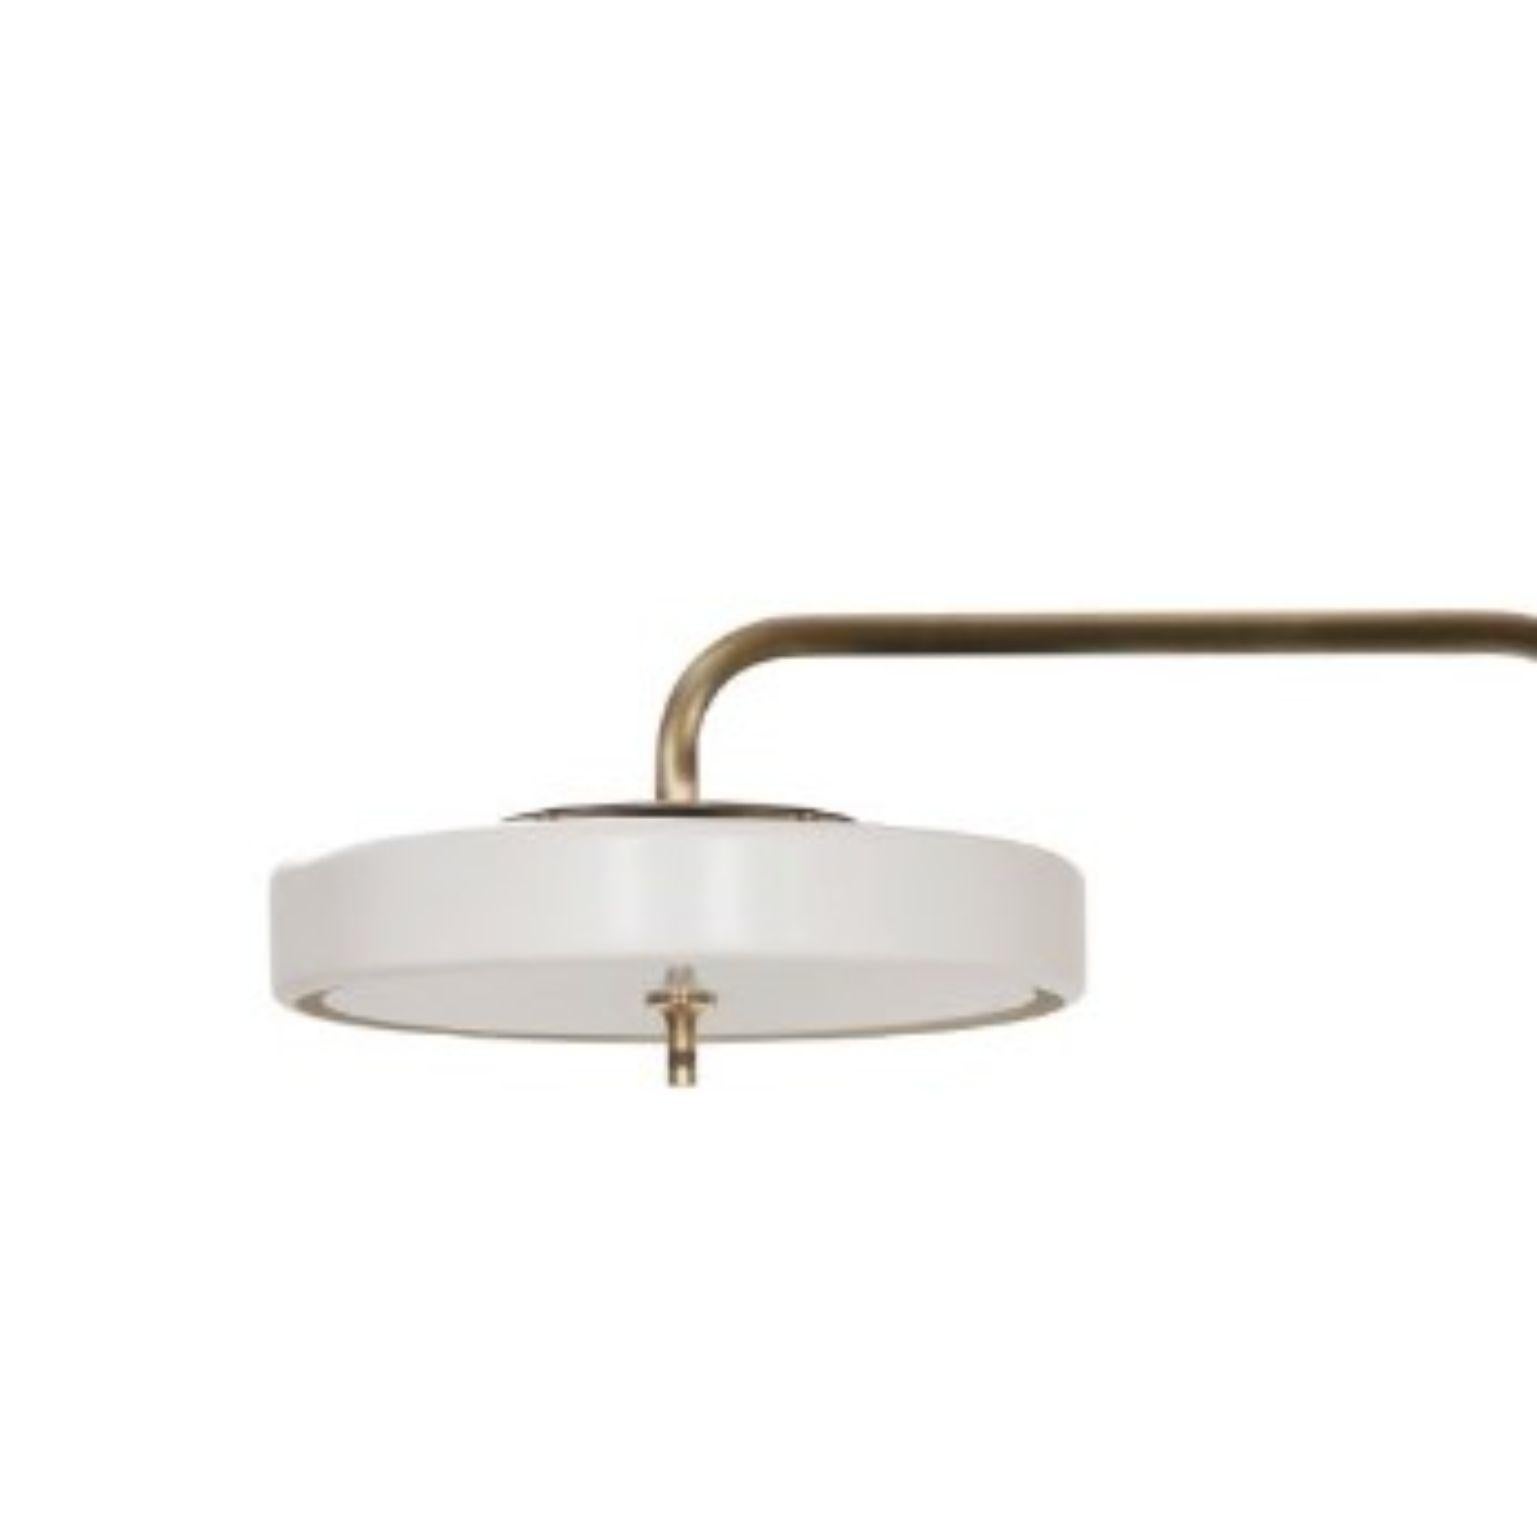 British Revolve Floor Lamp, Polished Brass, White by Bert Frank